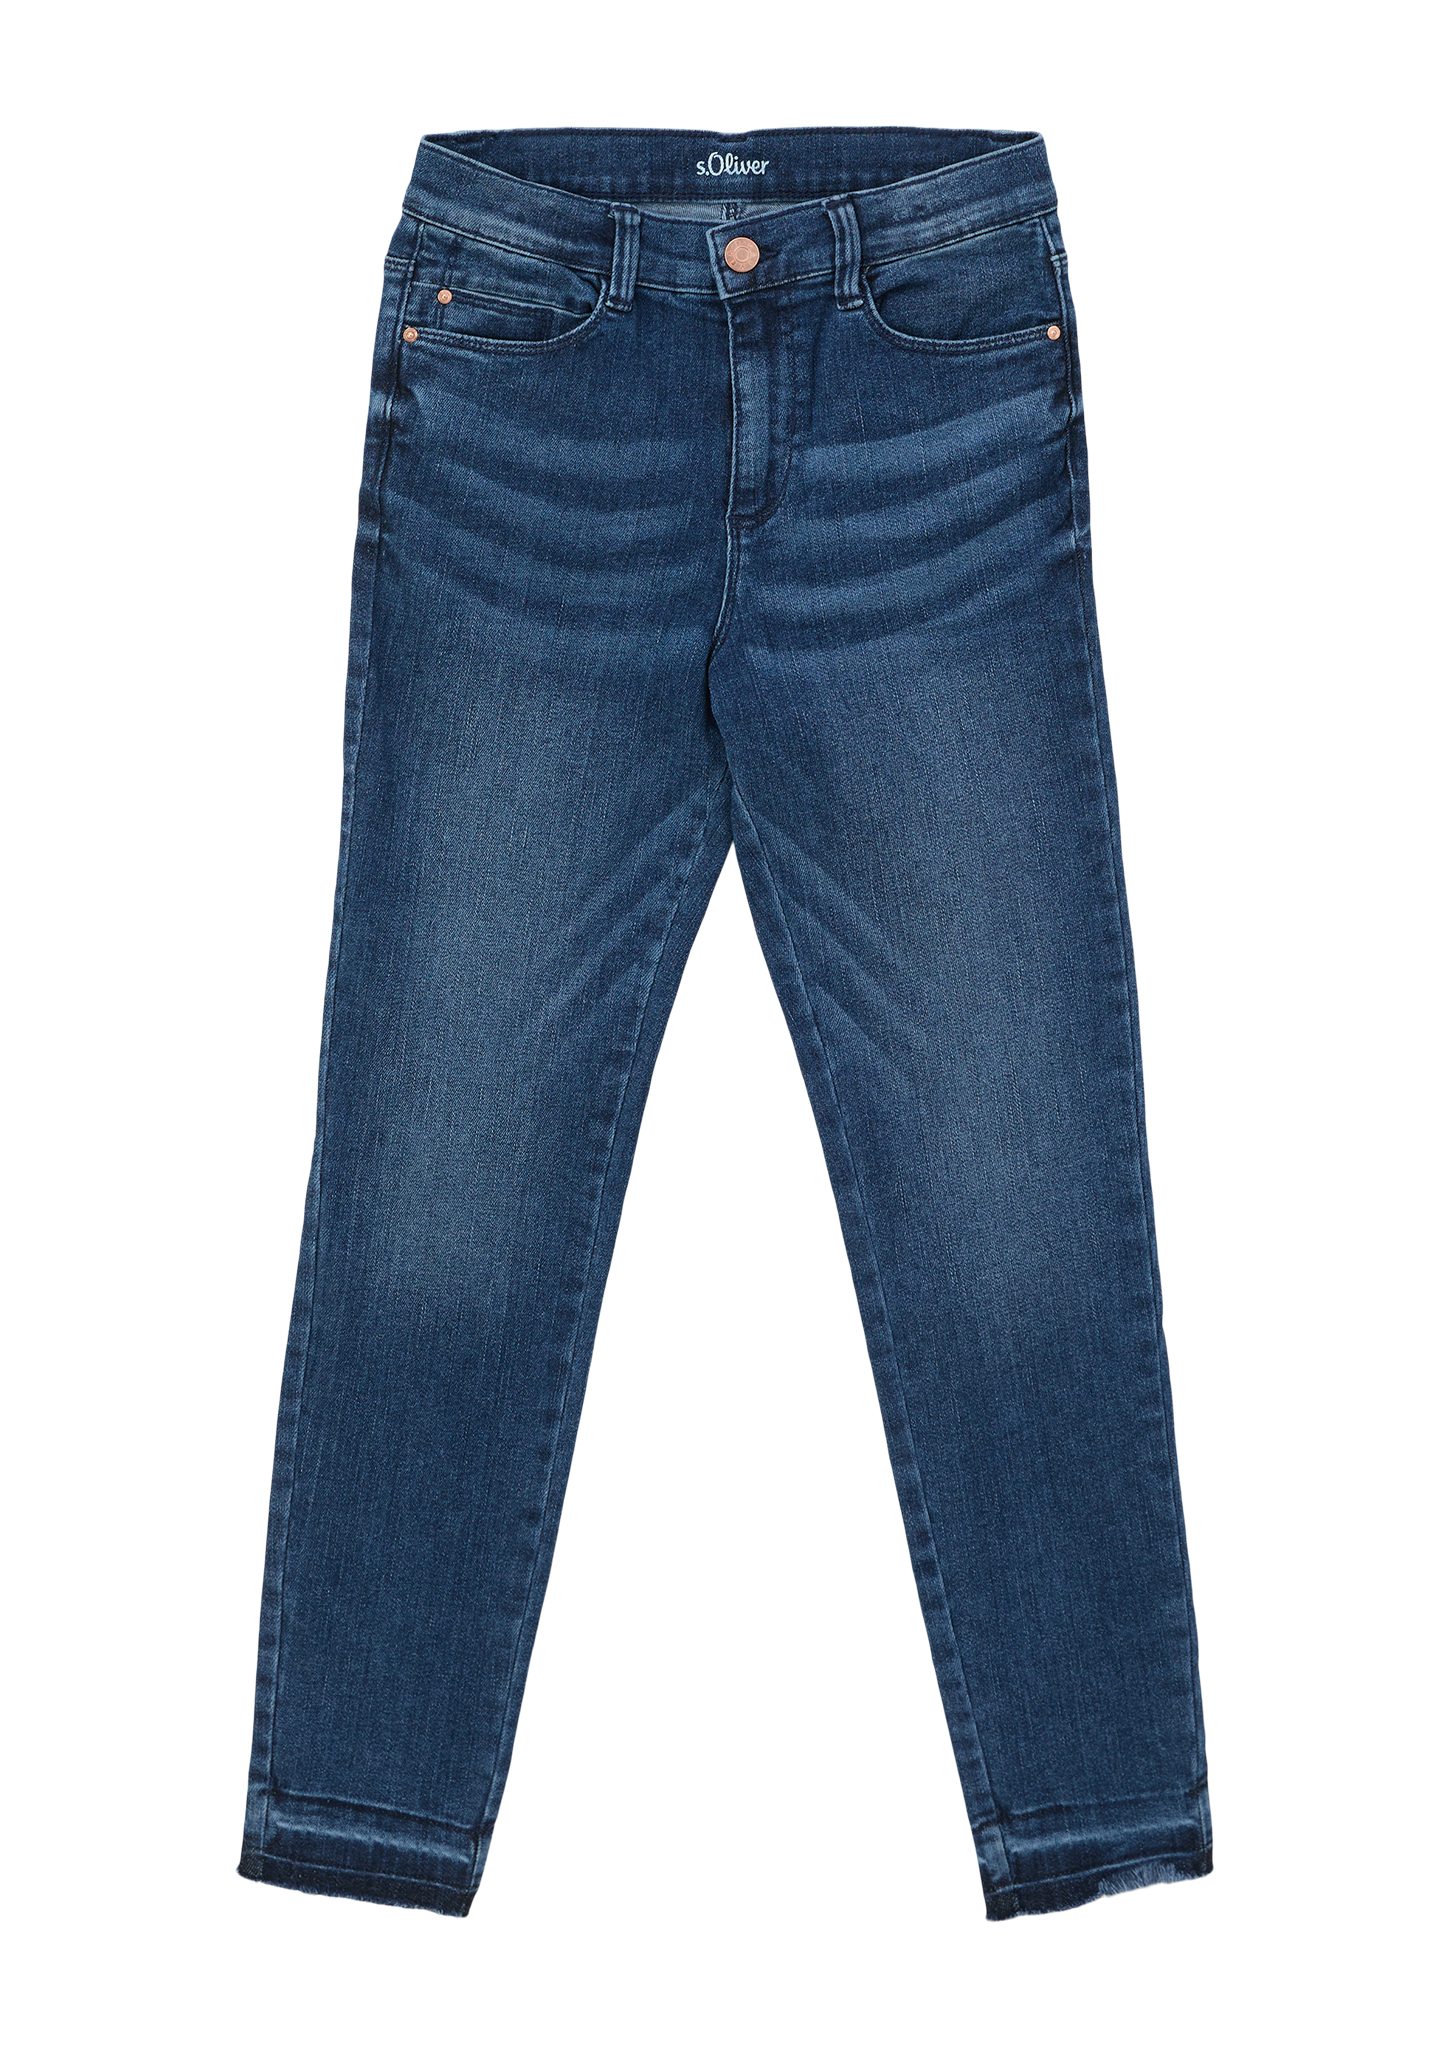 Waschung / Rise Regular Mid / Fit / s.Oliver Stoffhose Ankle Jeans Suri Slim Leg